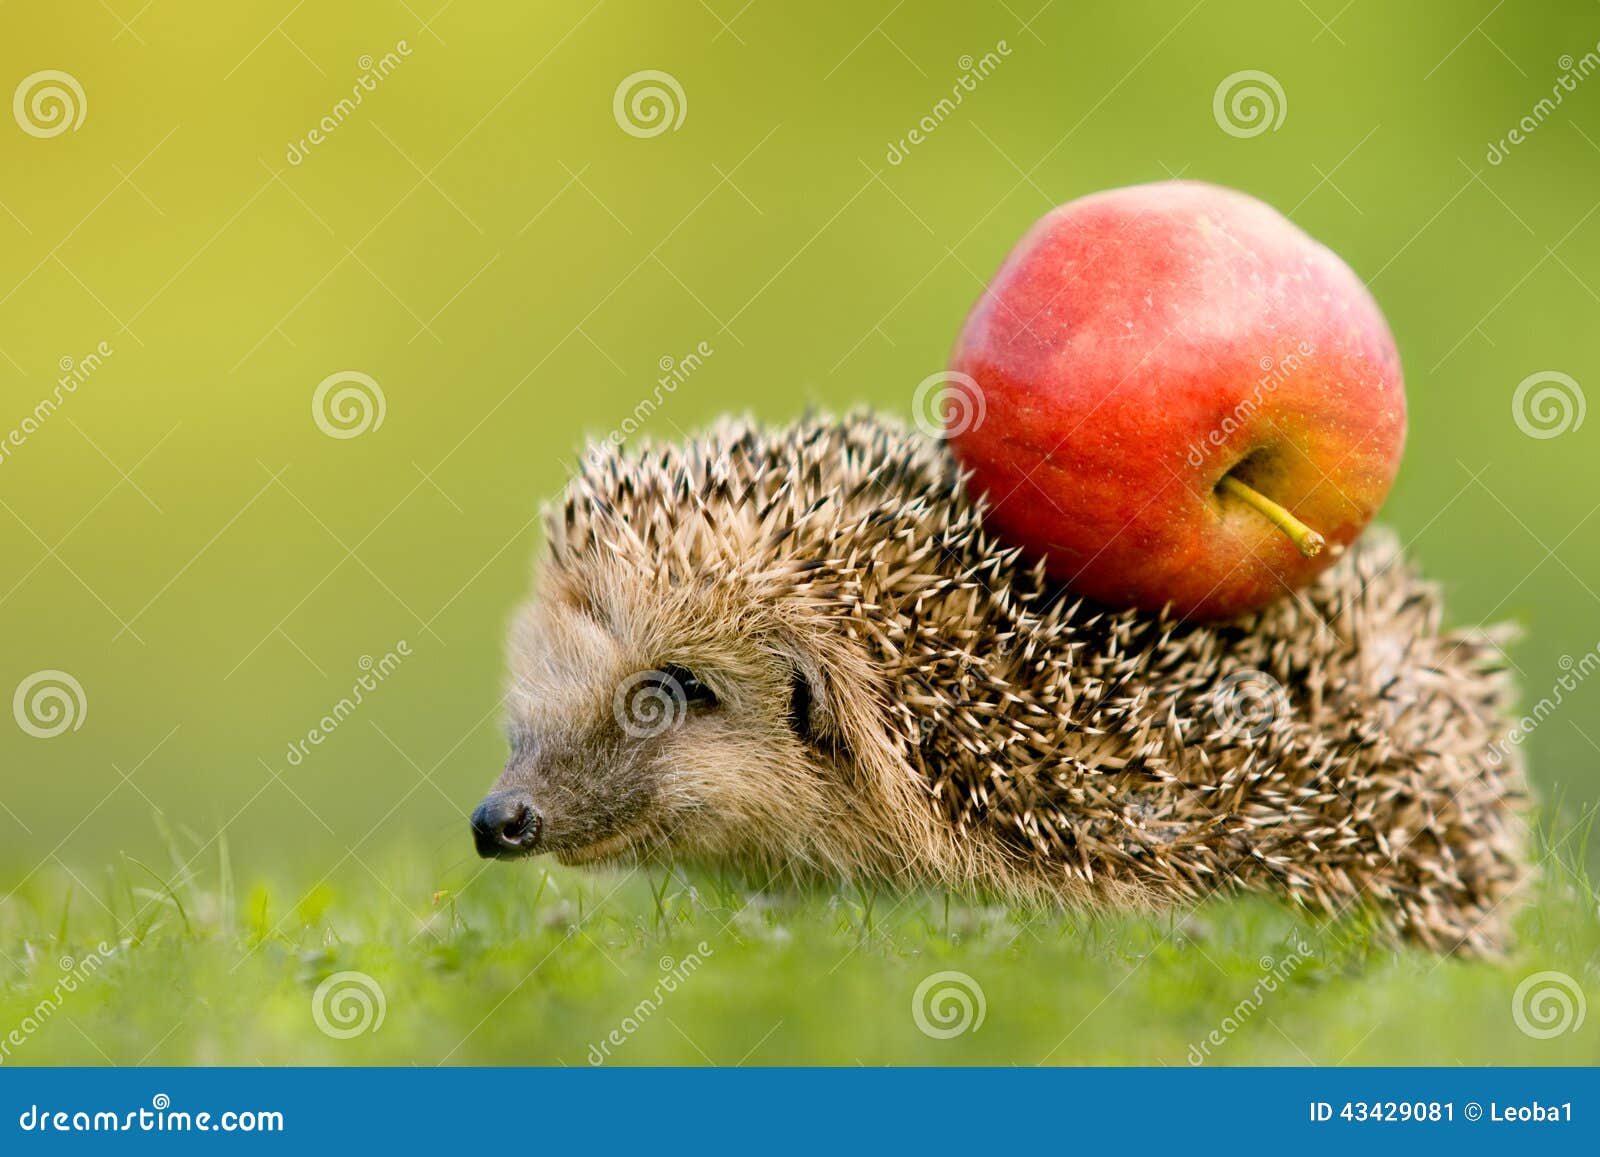 hedgehog with apple on the backs